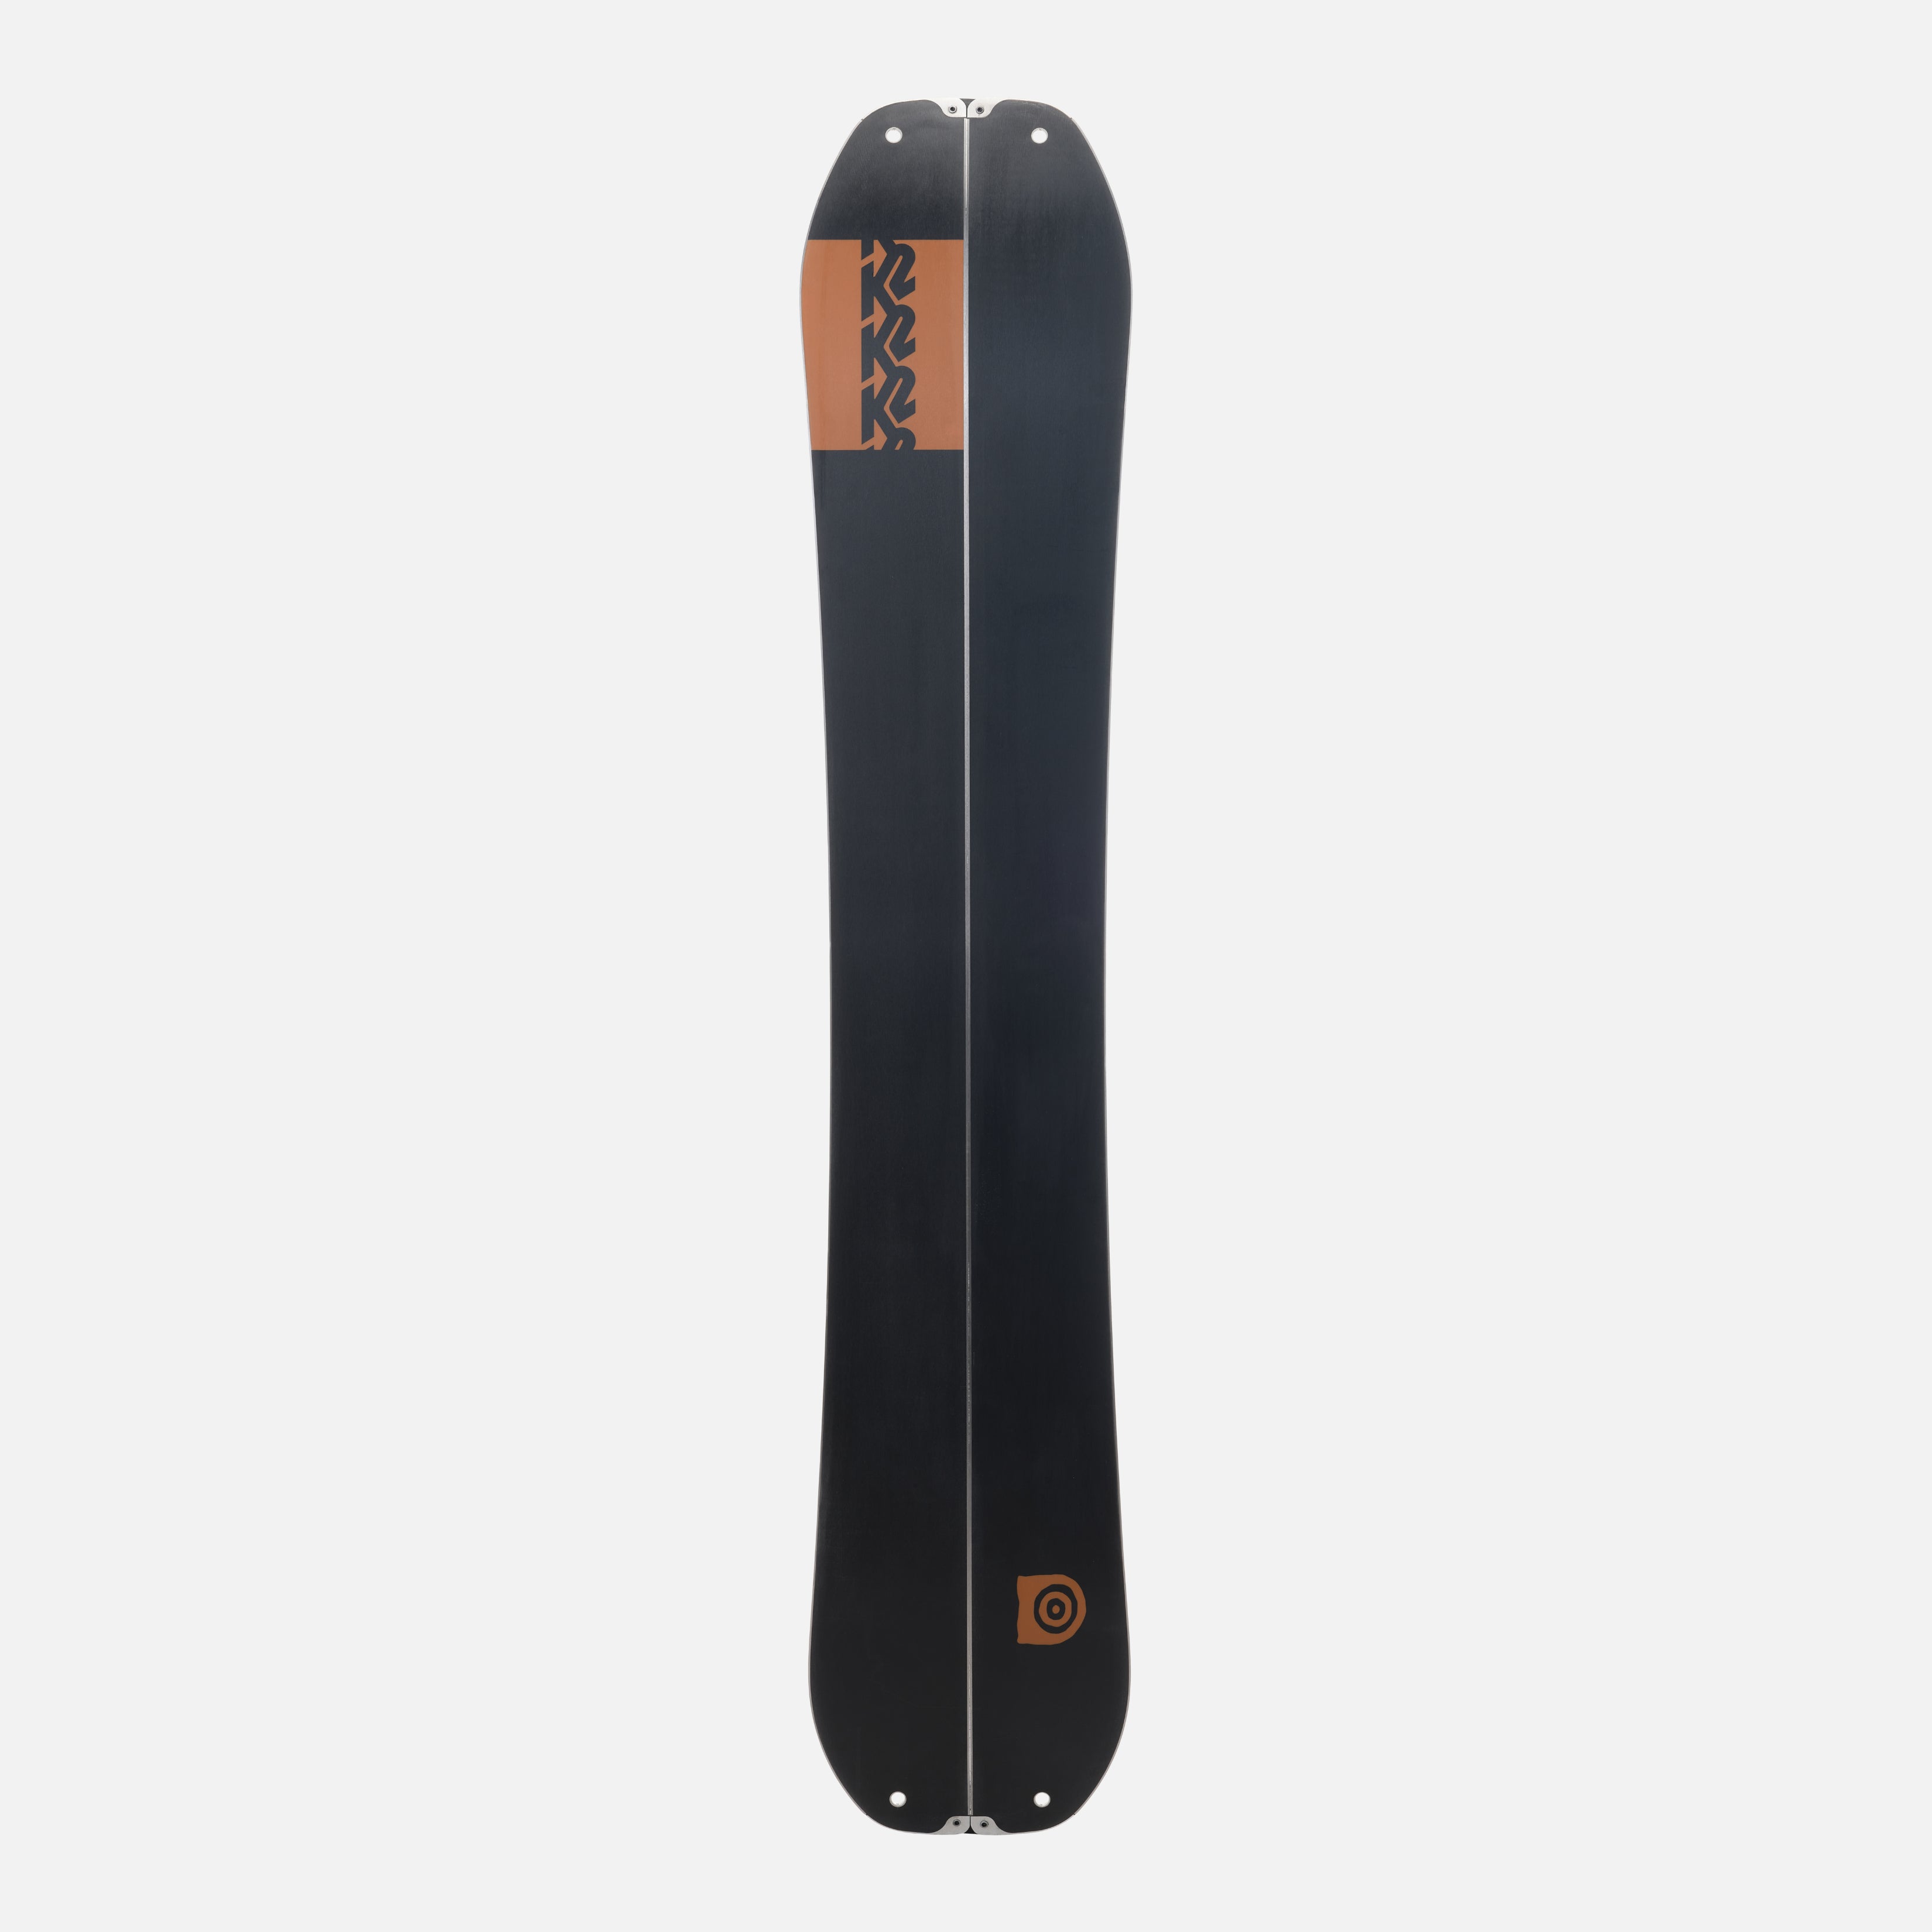 K2 Snowboards – aspect /